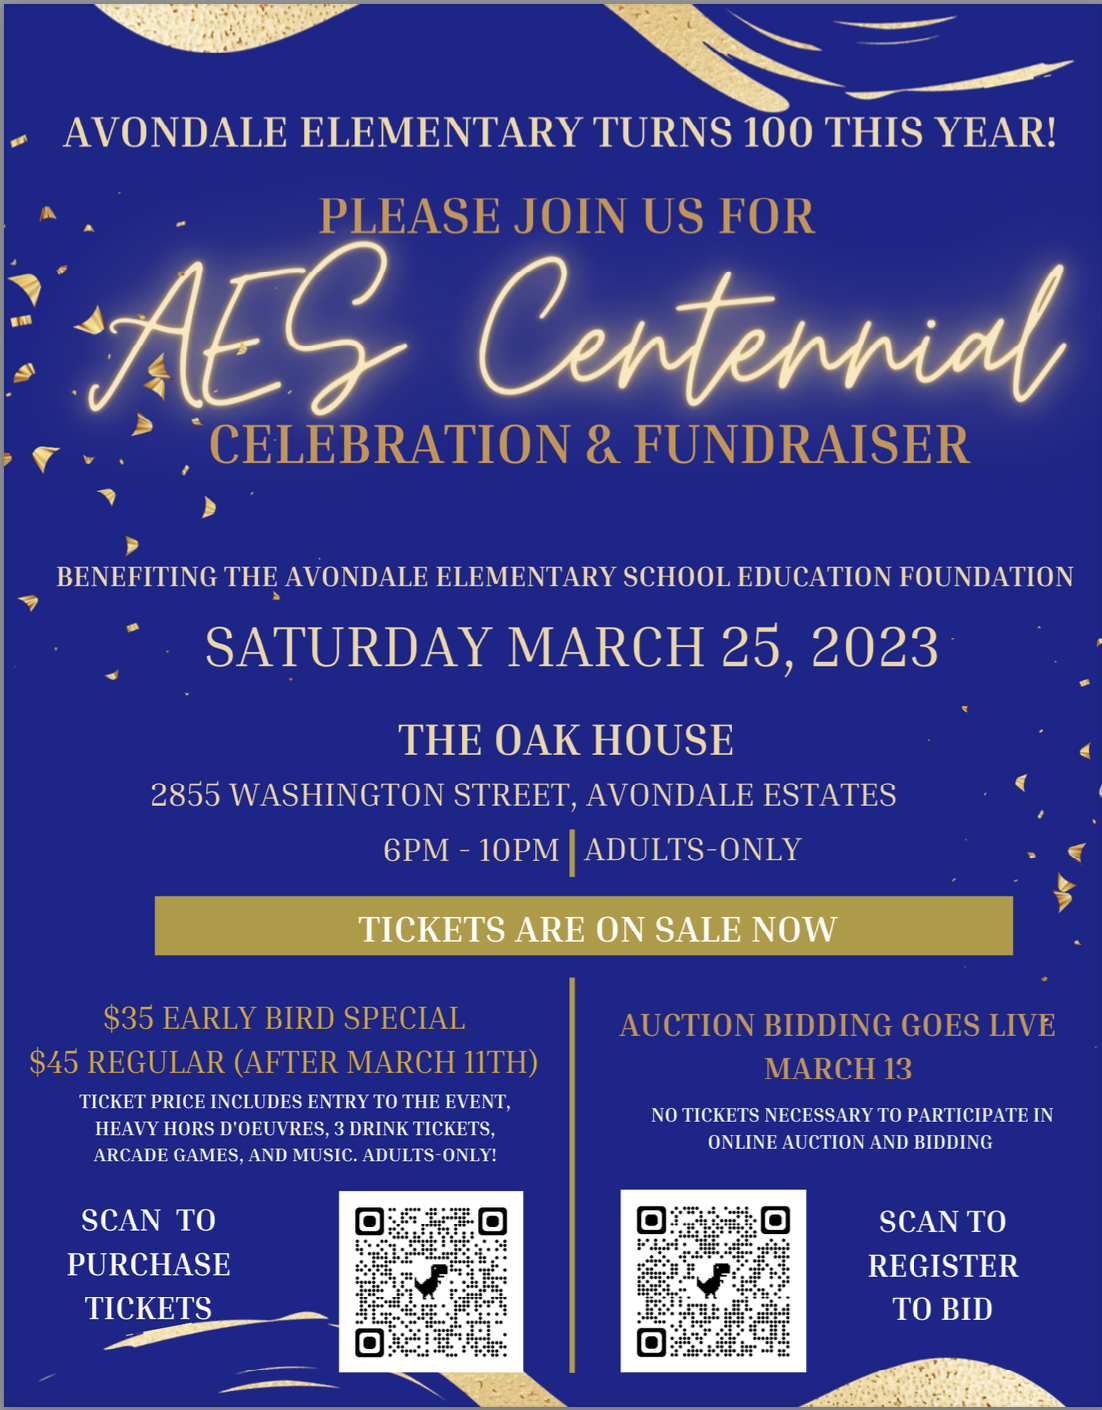 Avondale Elementary School Centennial celebration and fund-raiser flier.